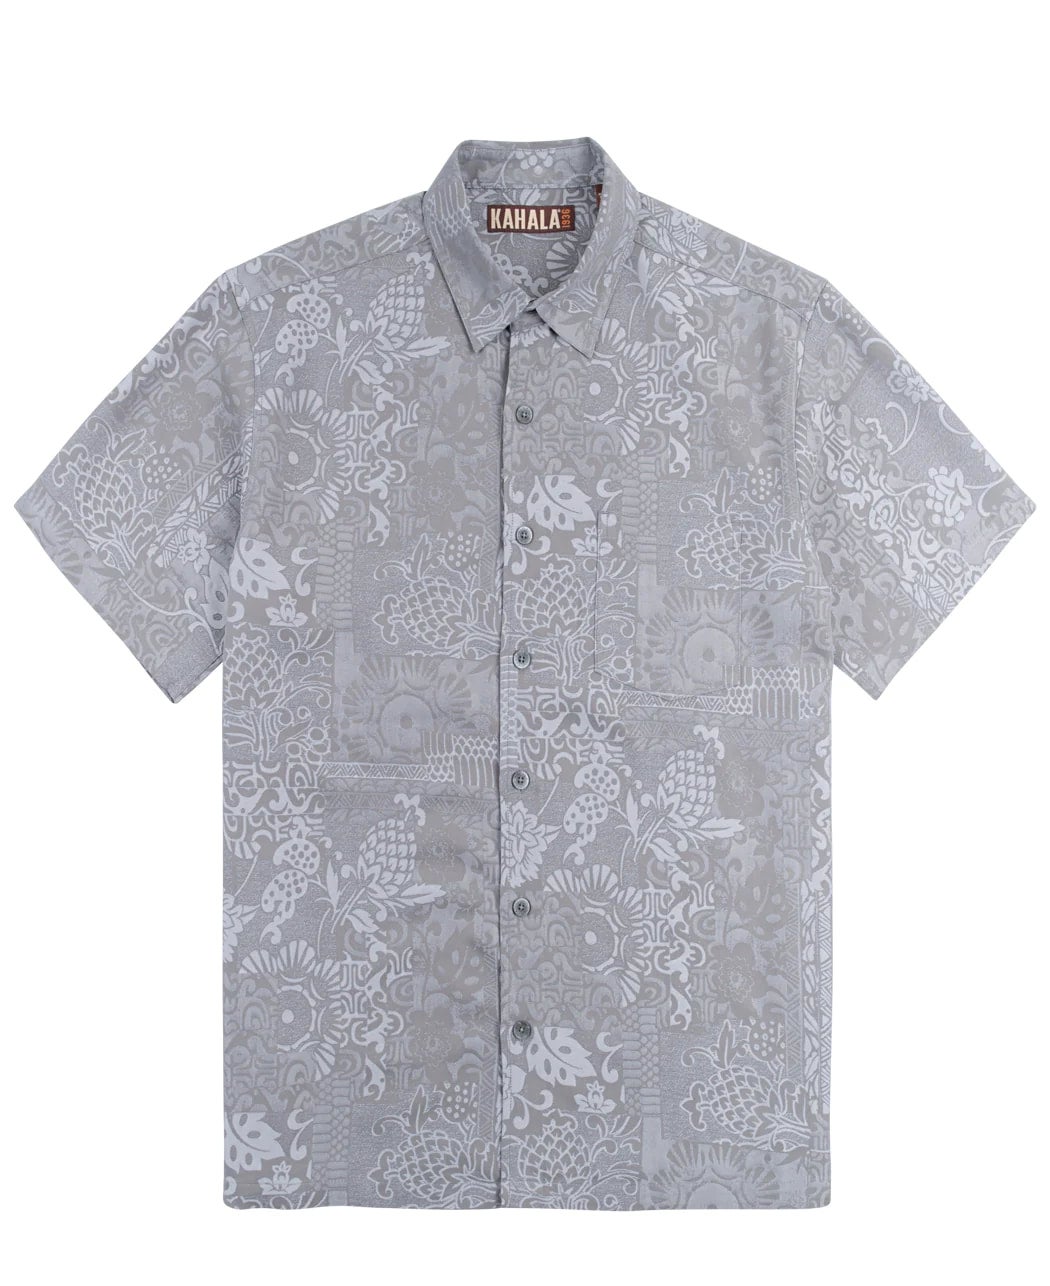 Apana Kahala Men's Aloha Shirt (Charcoal)